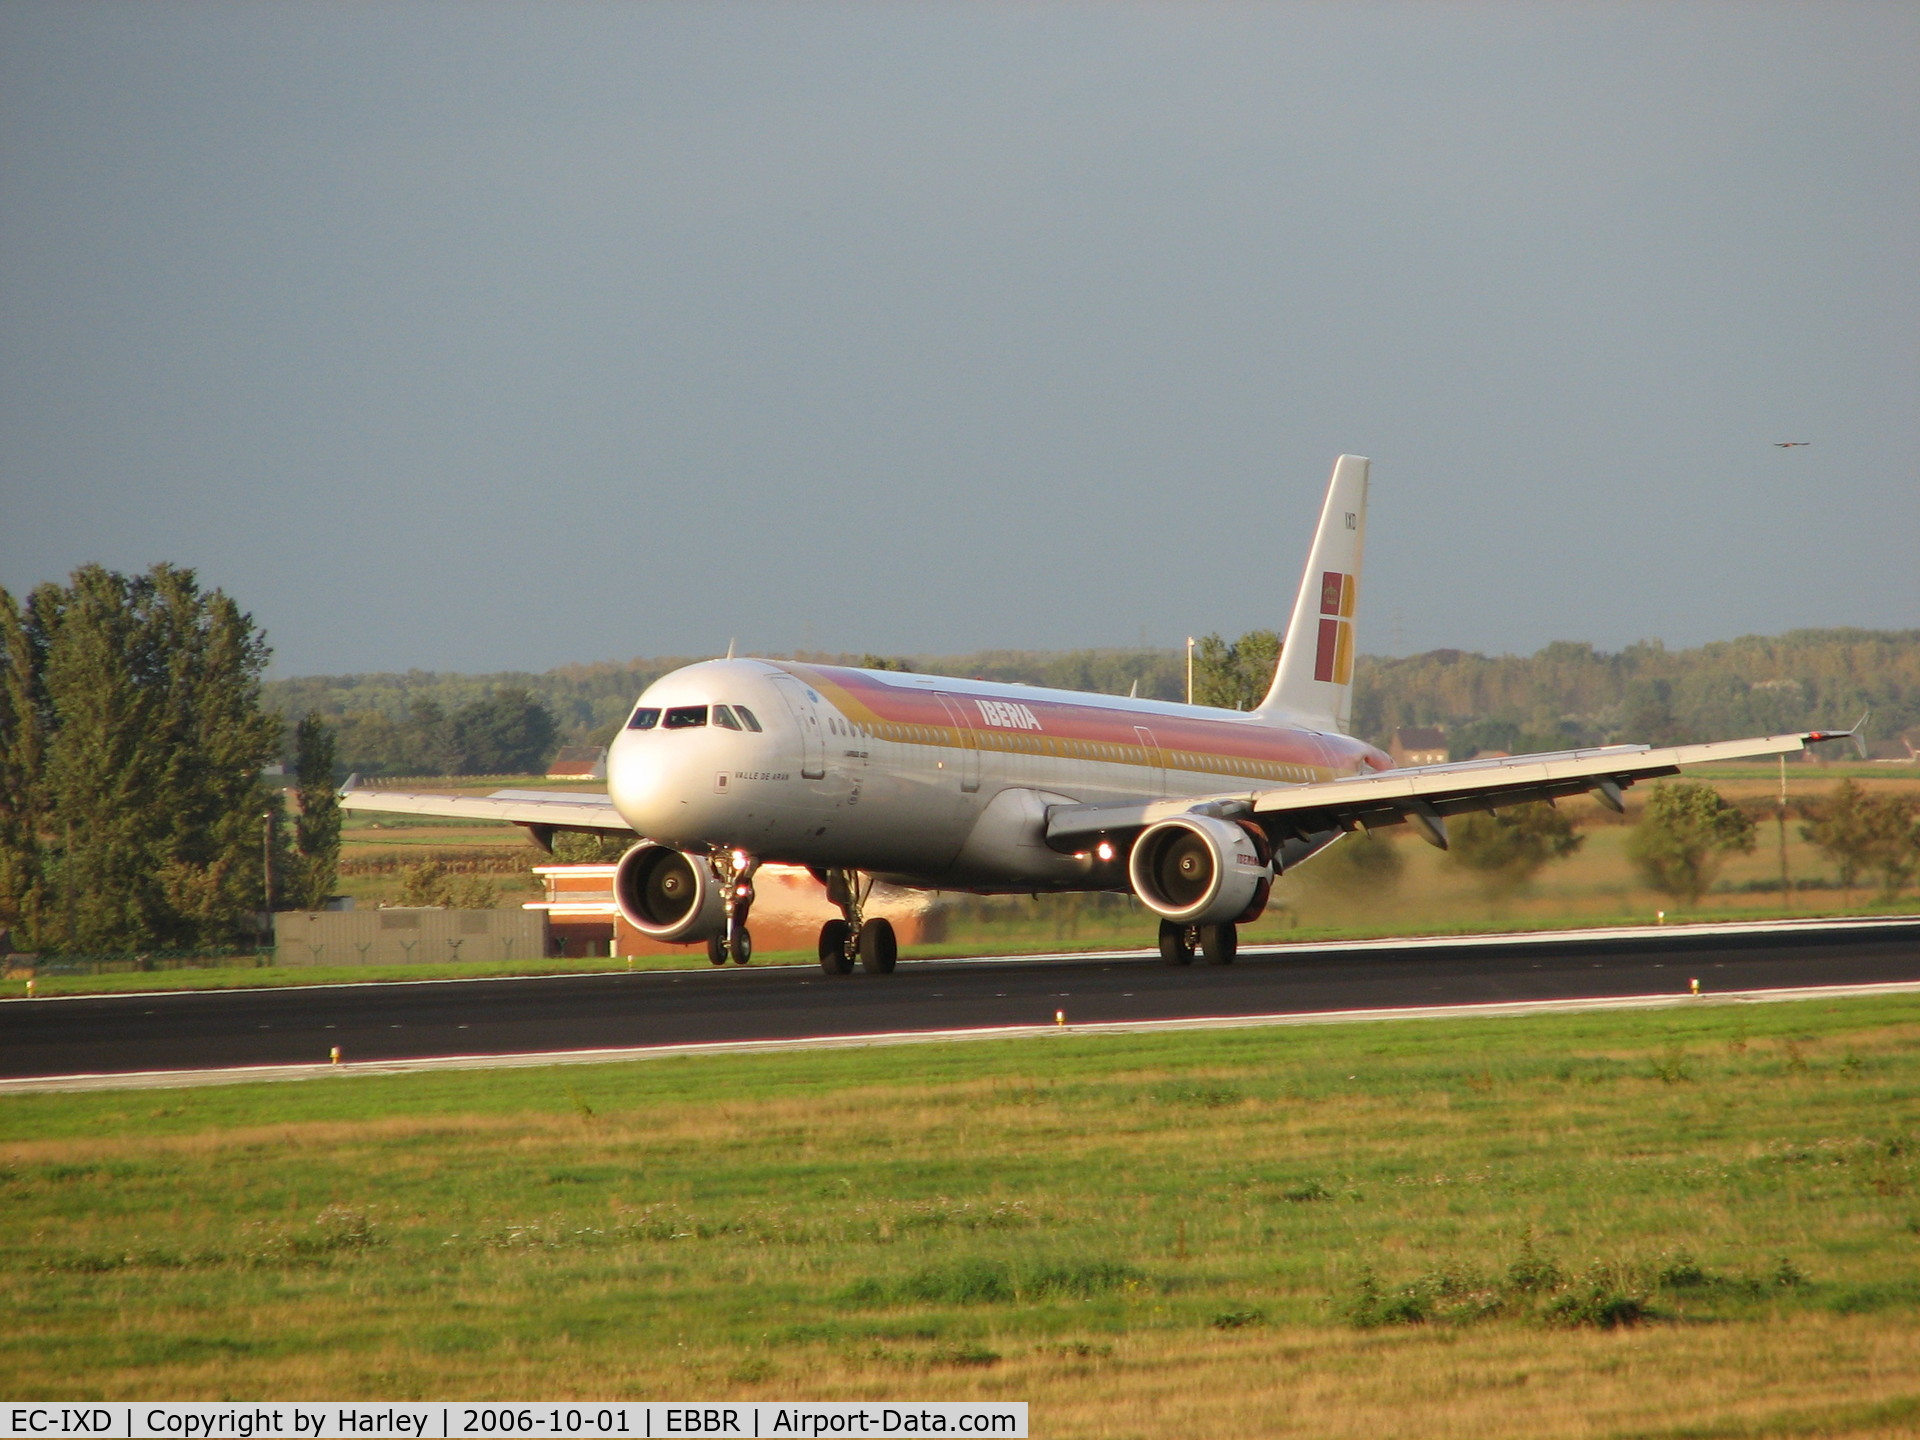 EC-IXD, 2004 Airbus A321-211 C/N 2220, touch down RWY 25L in Brussels